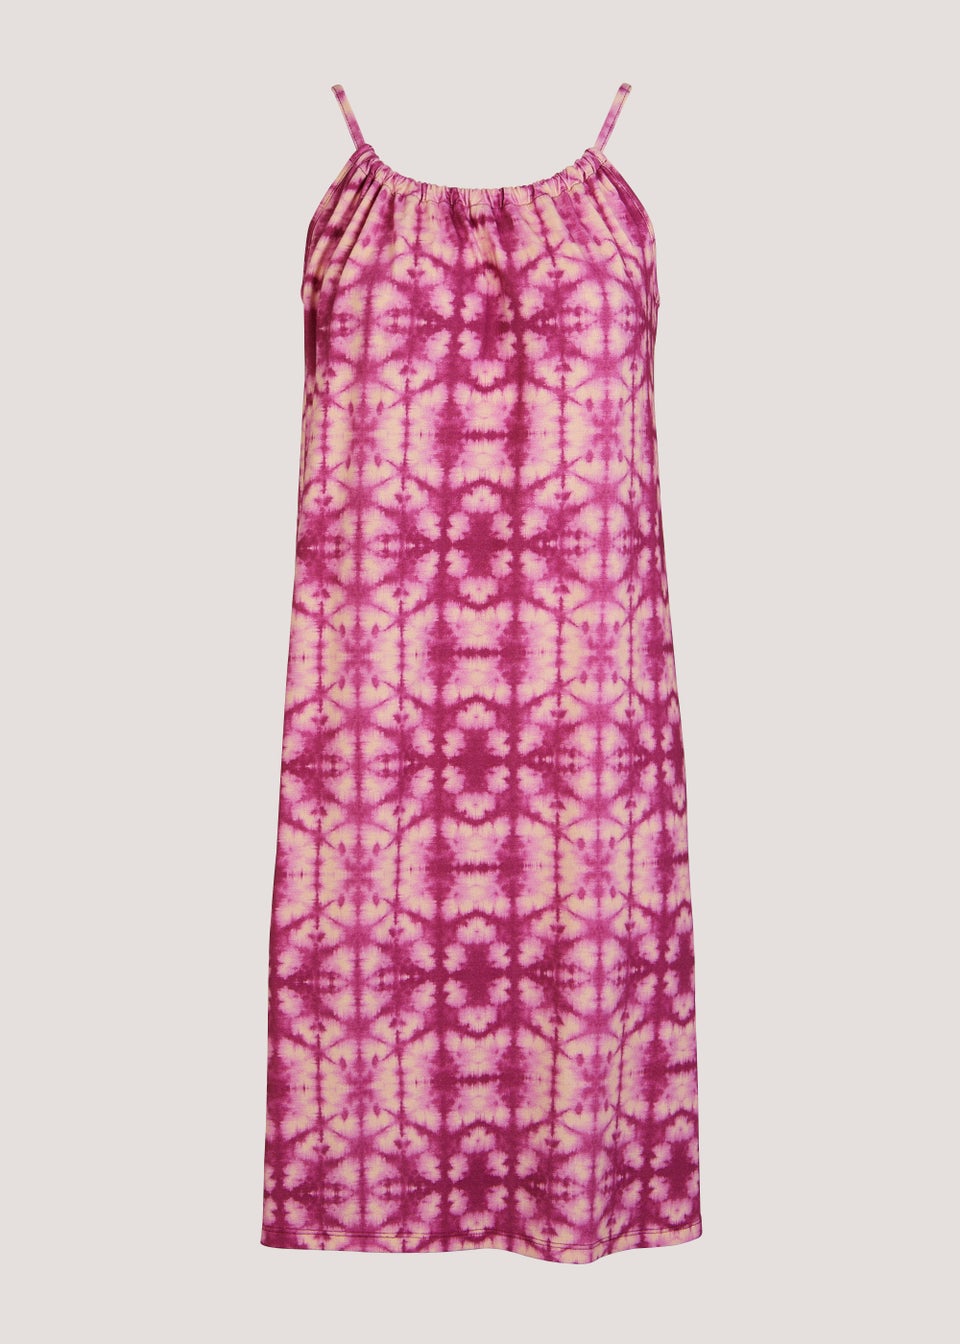 Pink Tie Dye Knee Length Dress